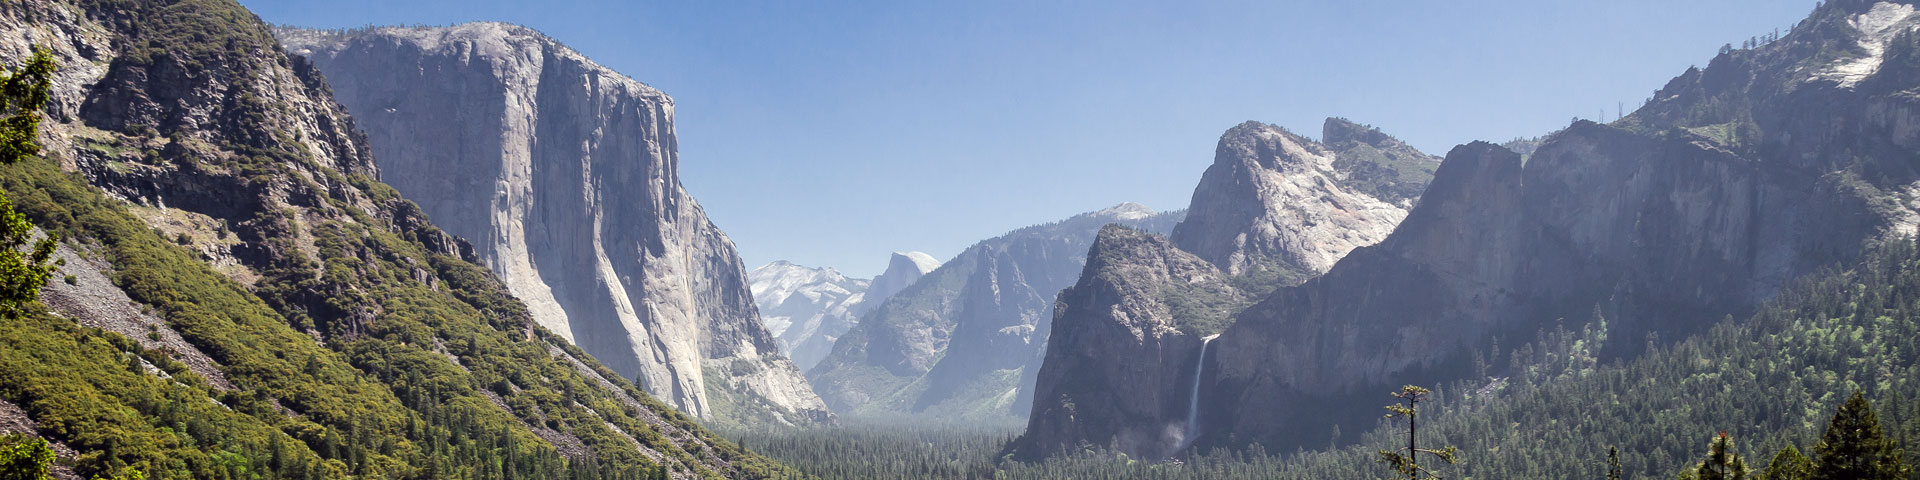 Yosemite nationalpark i Kalifornien, USA